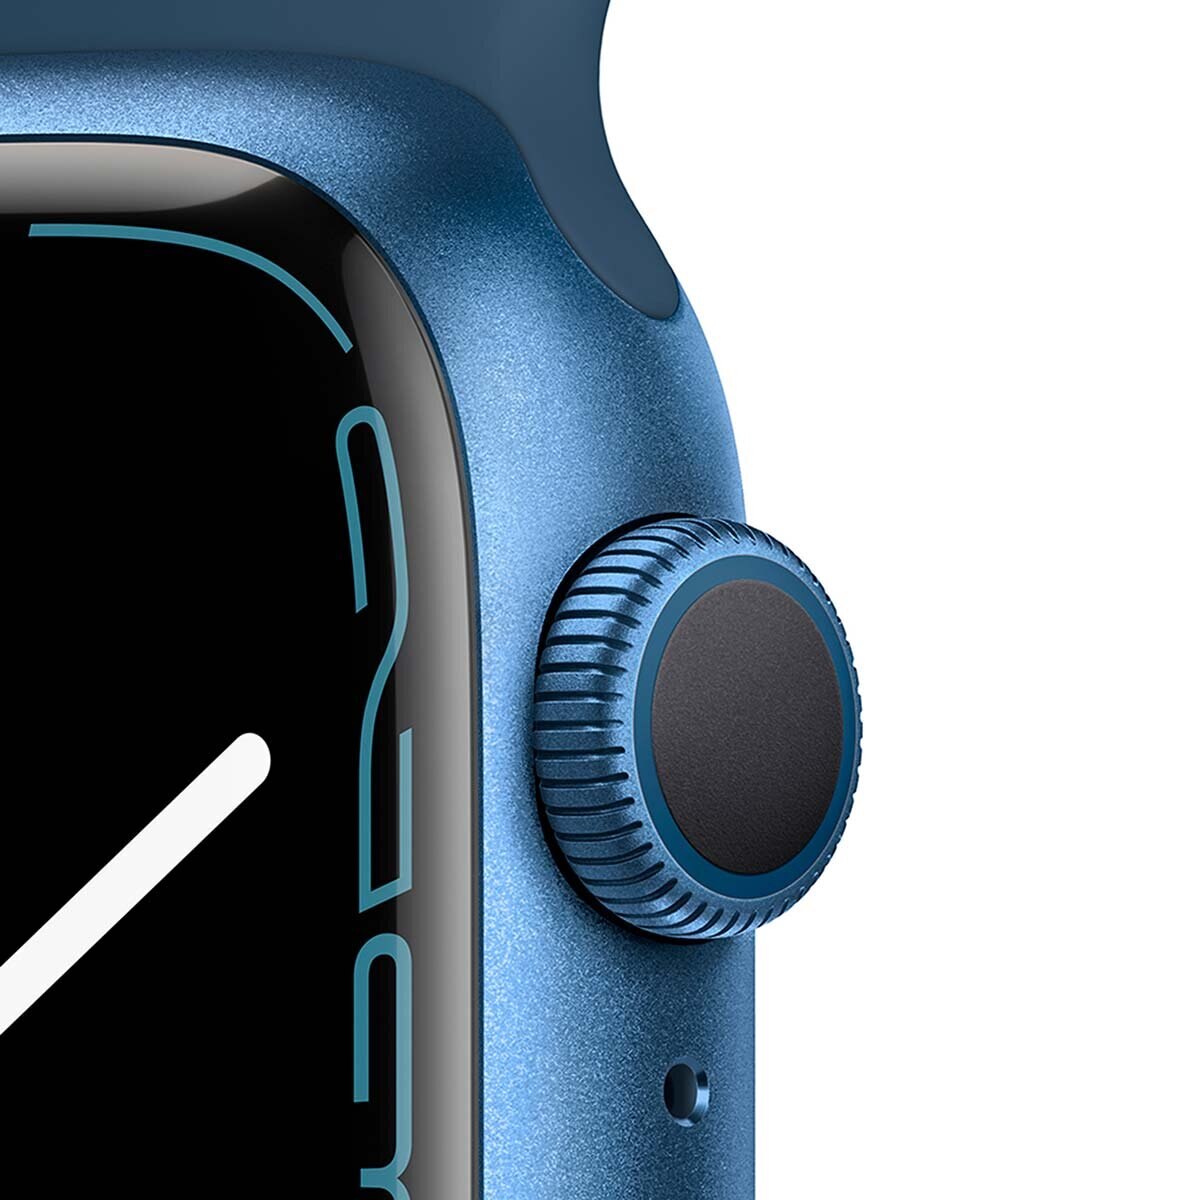 Apple Watch S7 (GPS) Caja de aluminio azul 41mm con correa deportiva color abismo